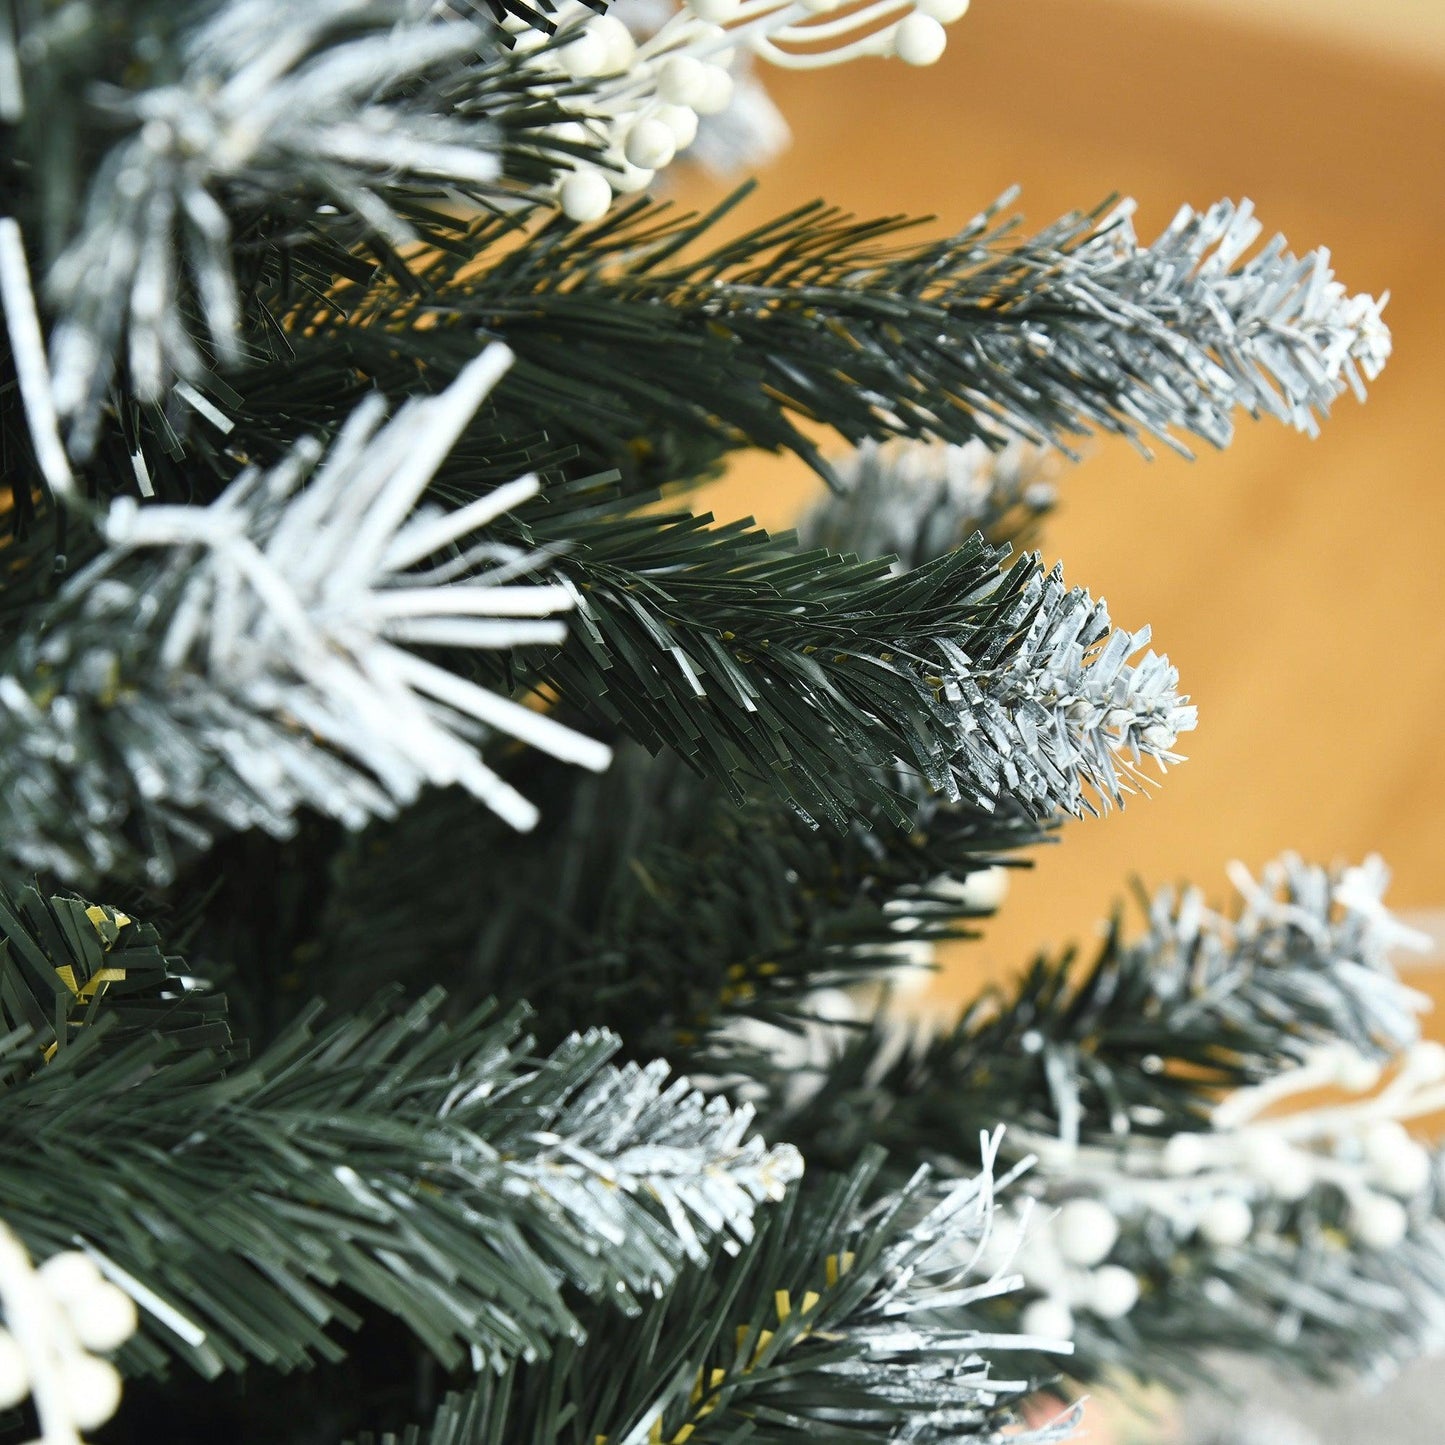 HOMCOM Snow-Dipped 6FT Christmas Tree - Indoor Holiday Decor - ALL4U RETAILER LTD